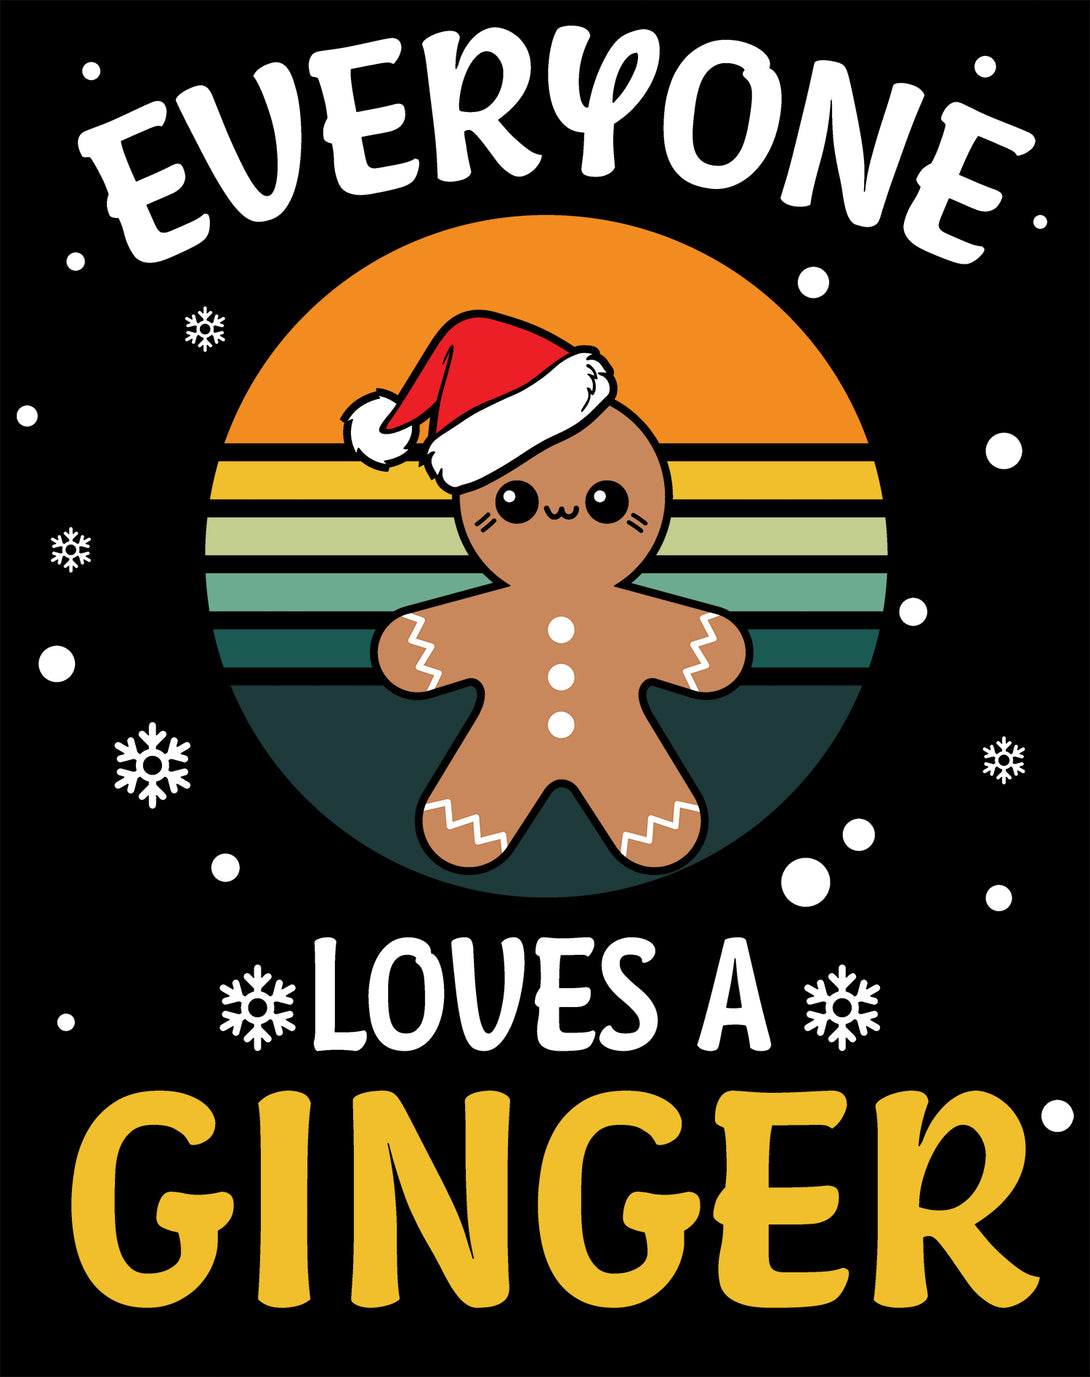 Christmas Ginger Everyone Loves Meme Fun Gingerbread Man Lol Kid's T-Shirt Black - Urban Species Design Close Up